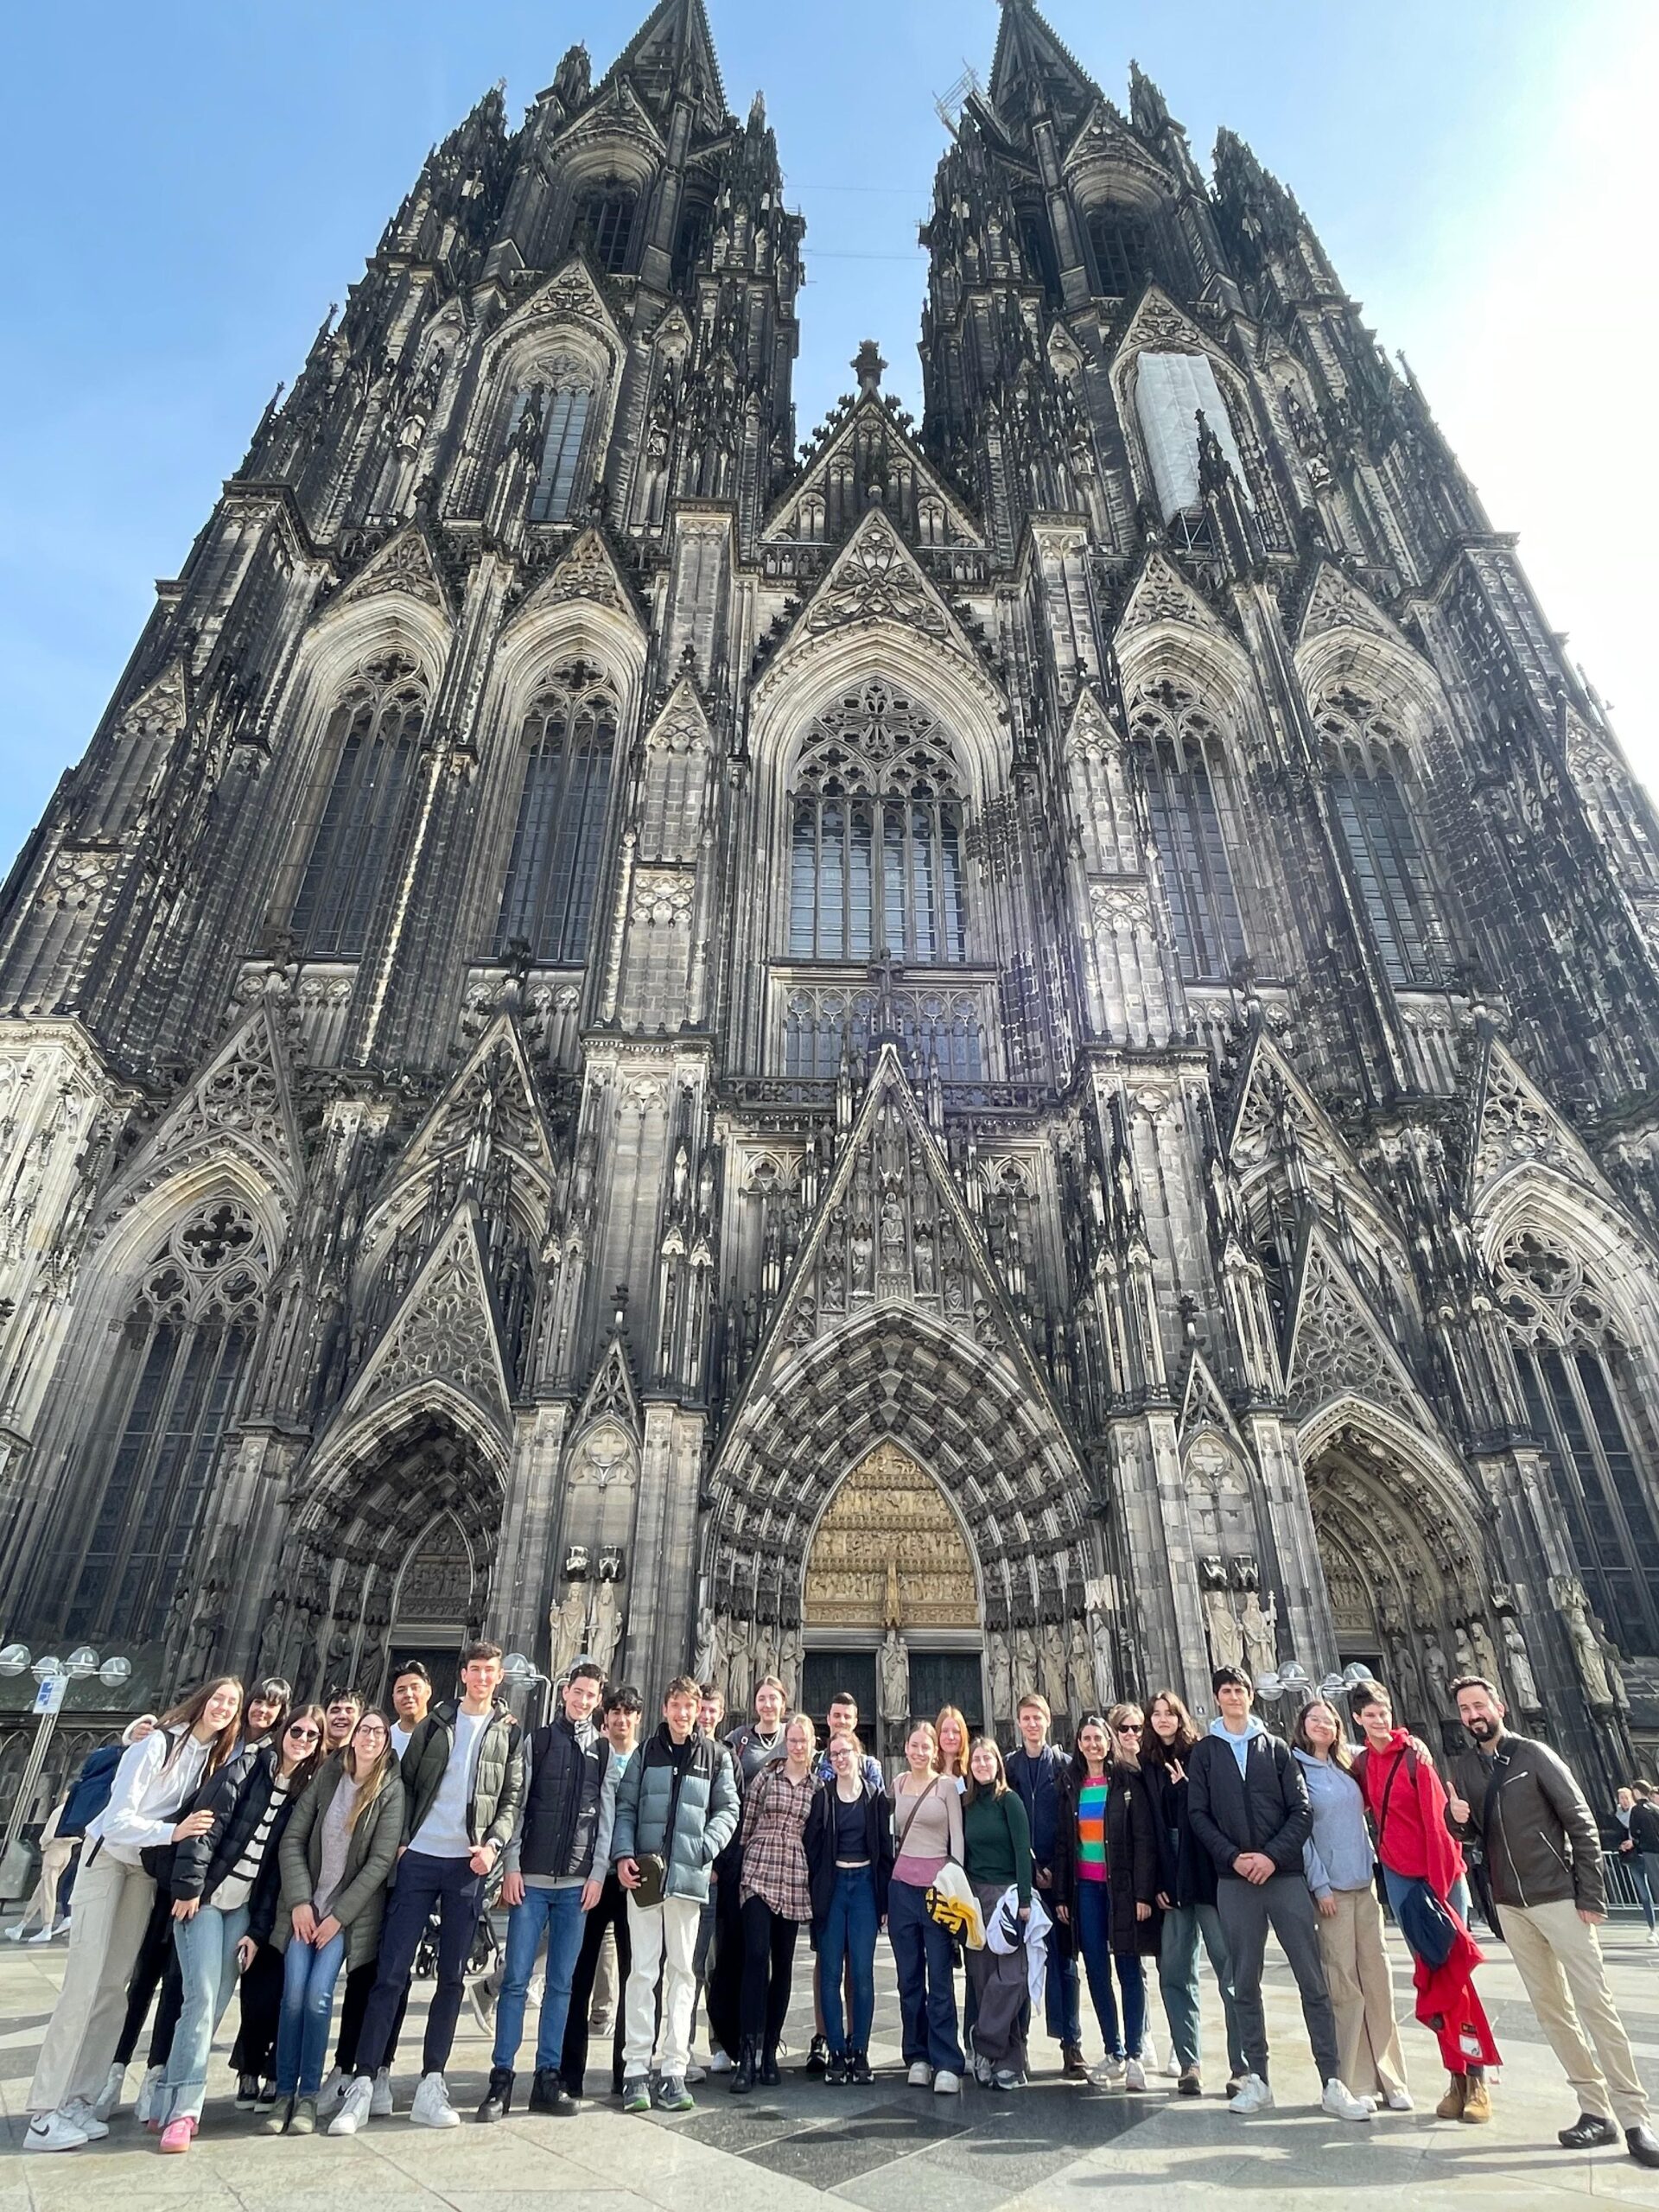 Catedral de Köln